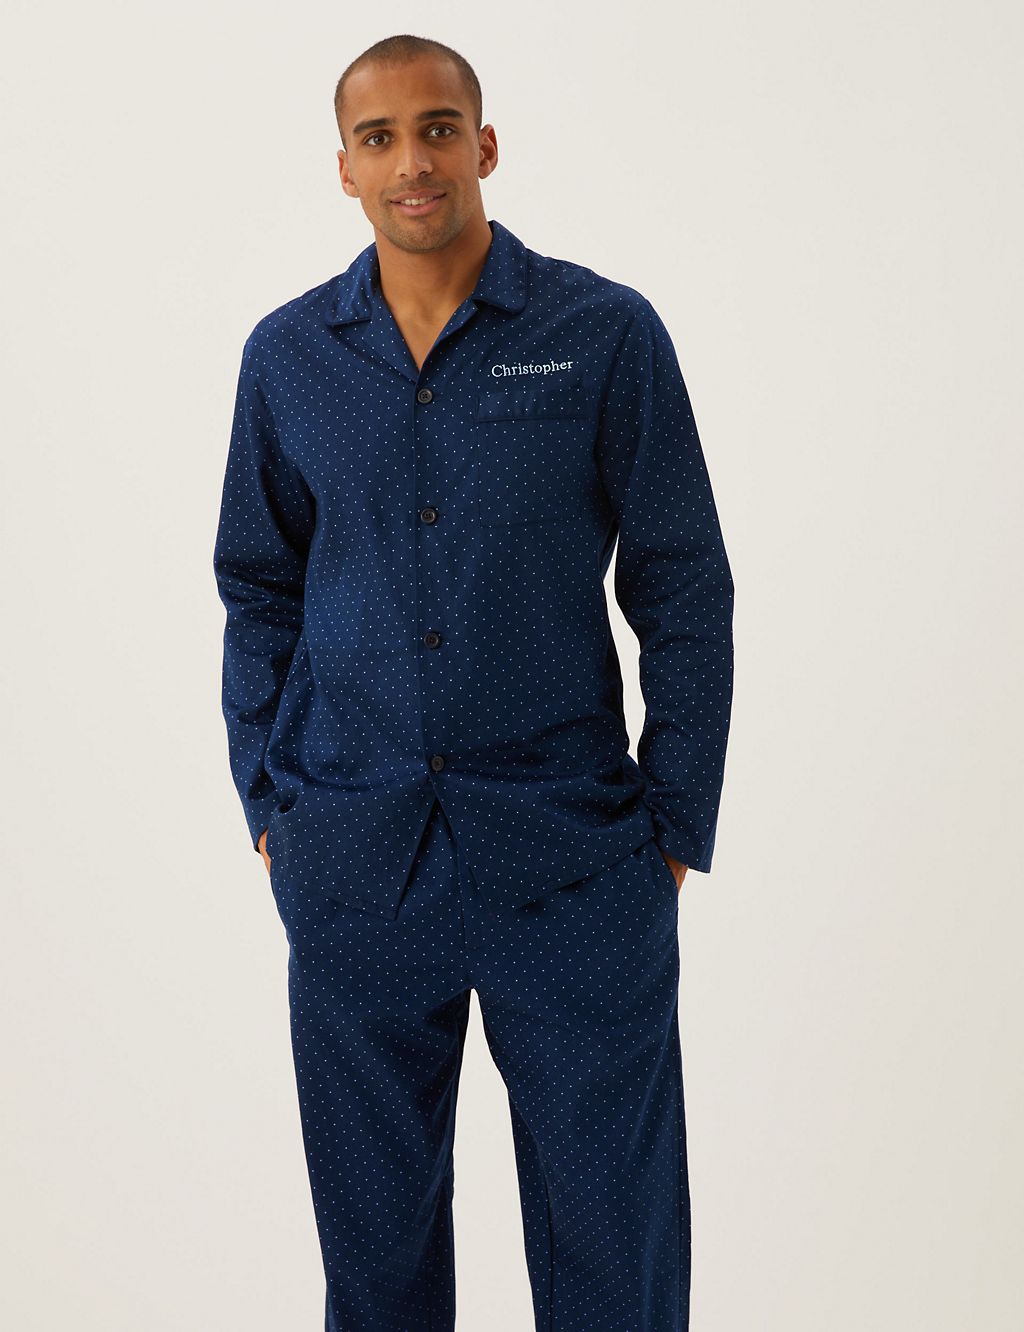 Personalised Men's Polka Dot Pyjama Set 1 of 2